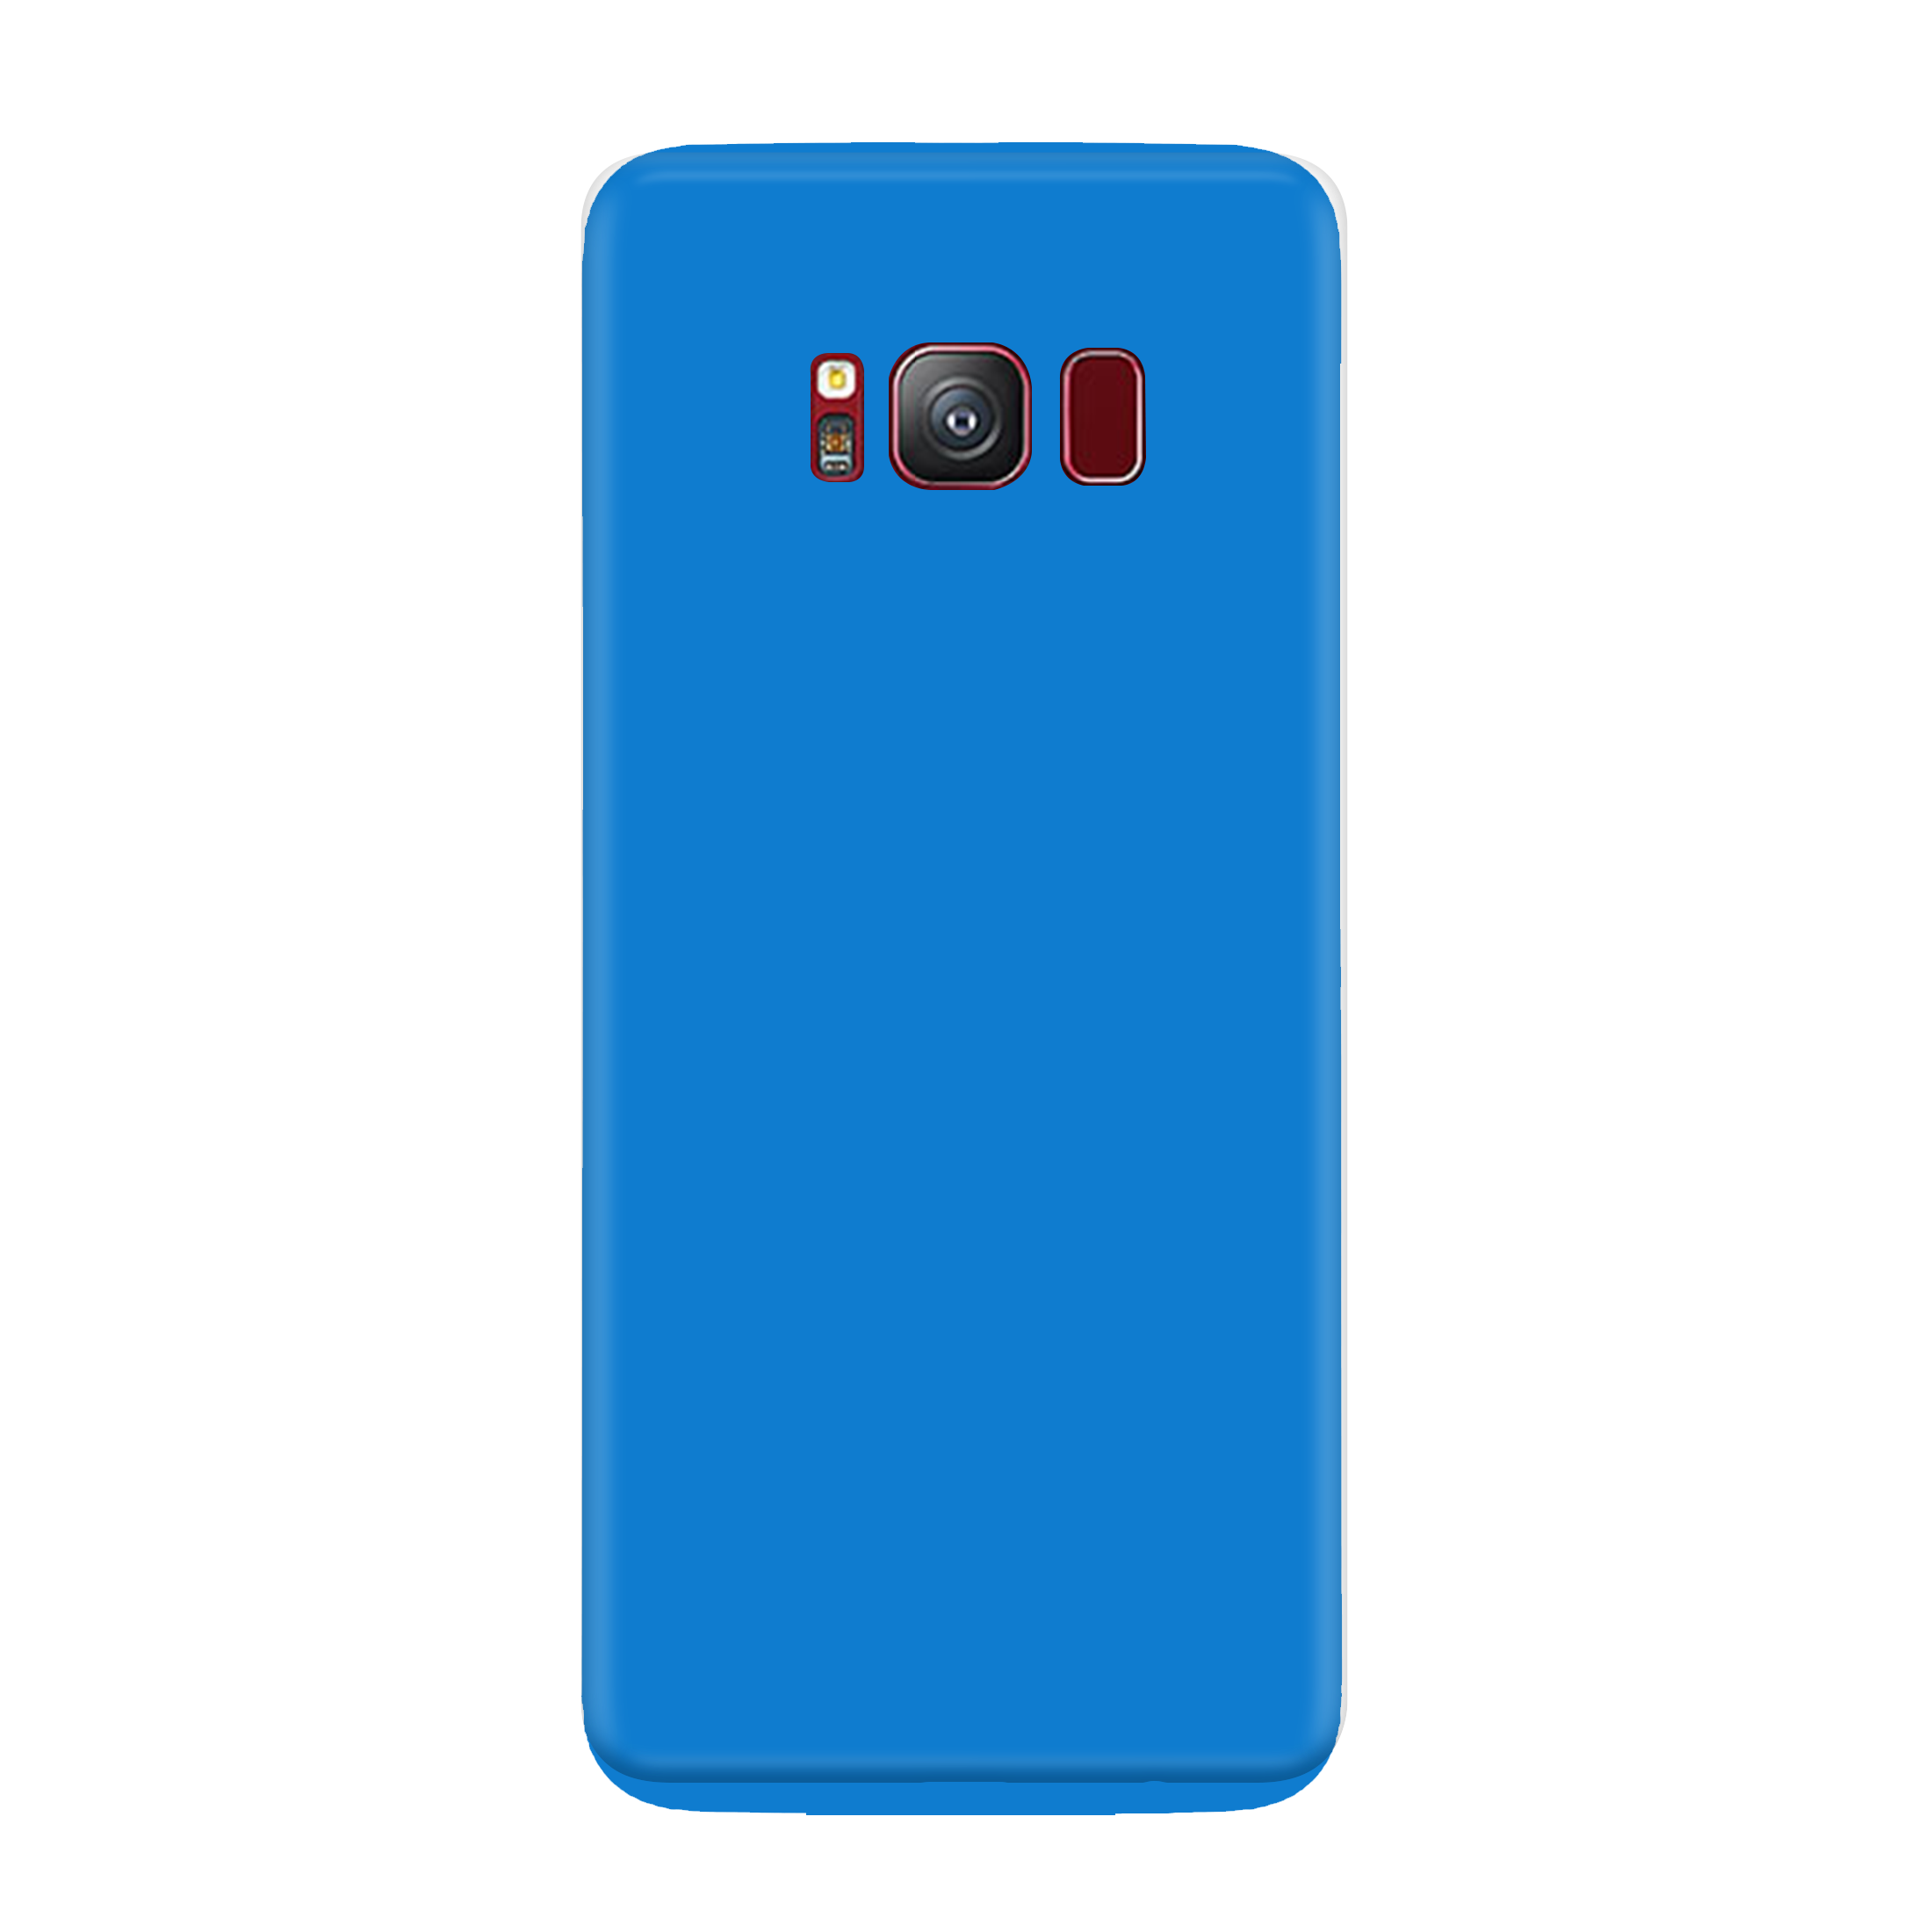 Matte Blue Skin for Samsung S8